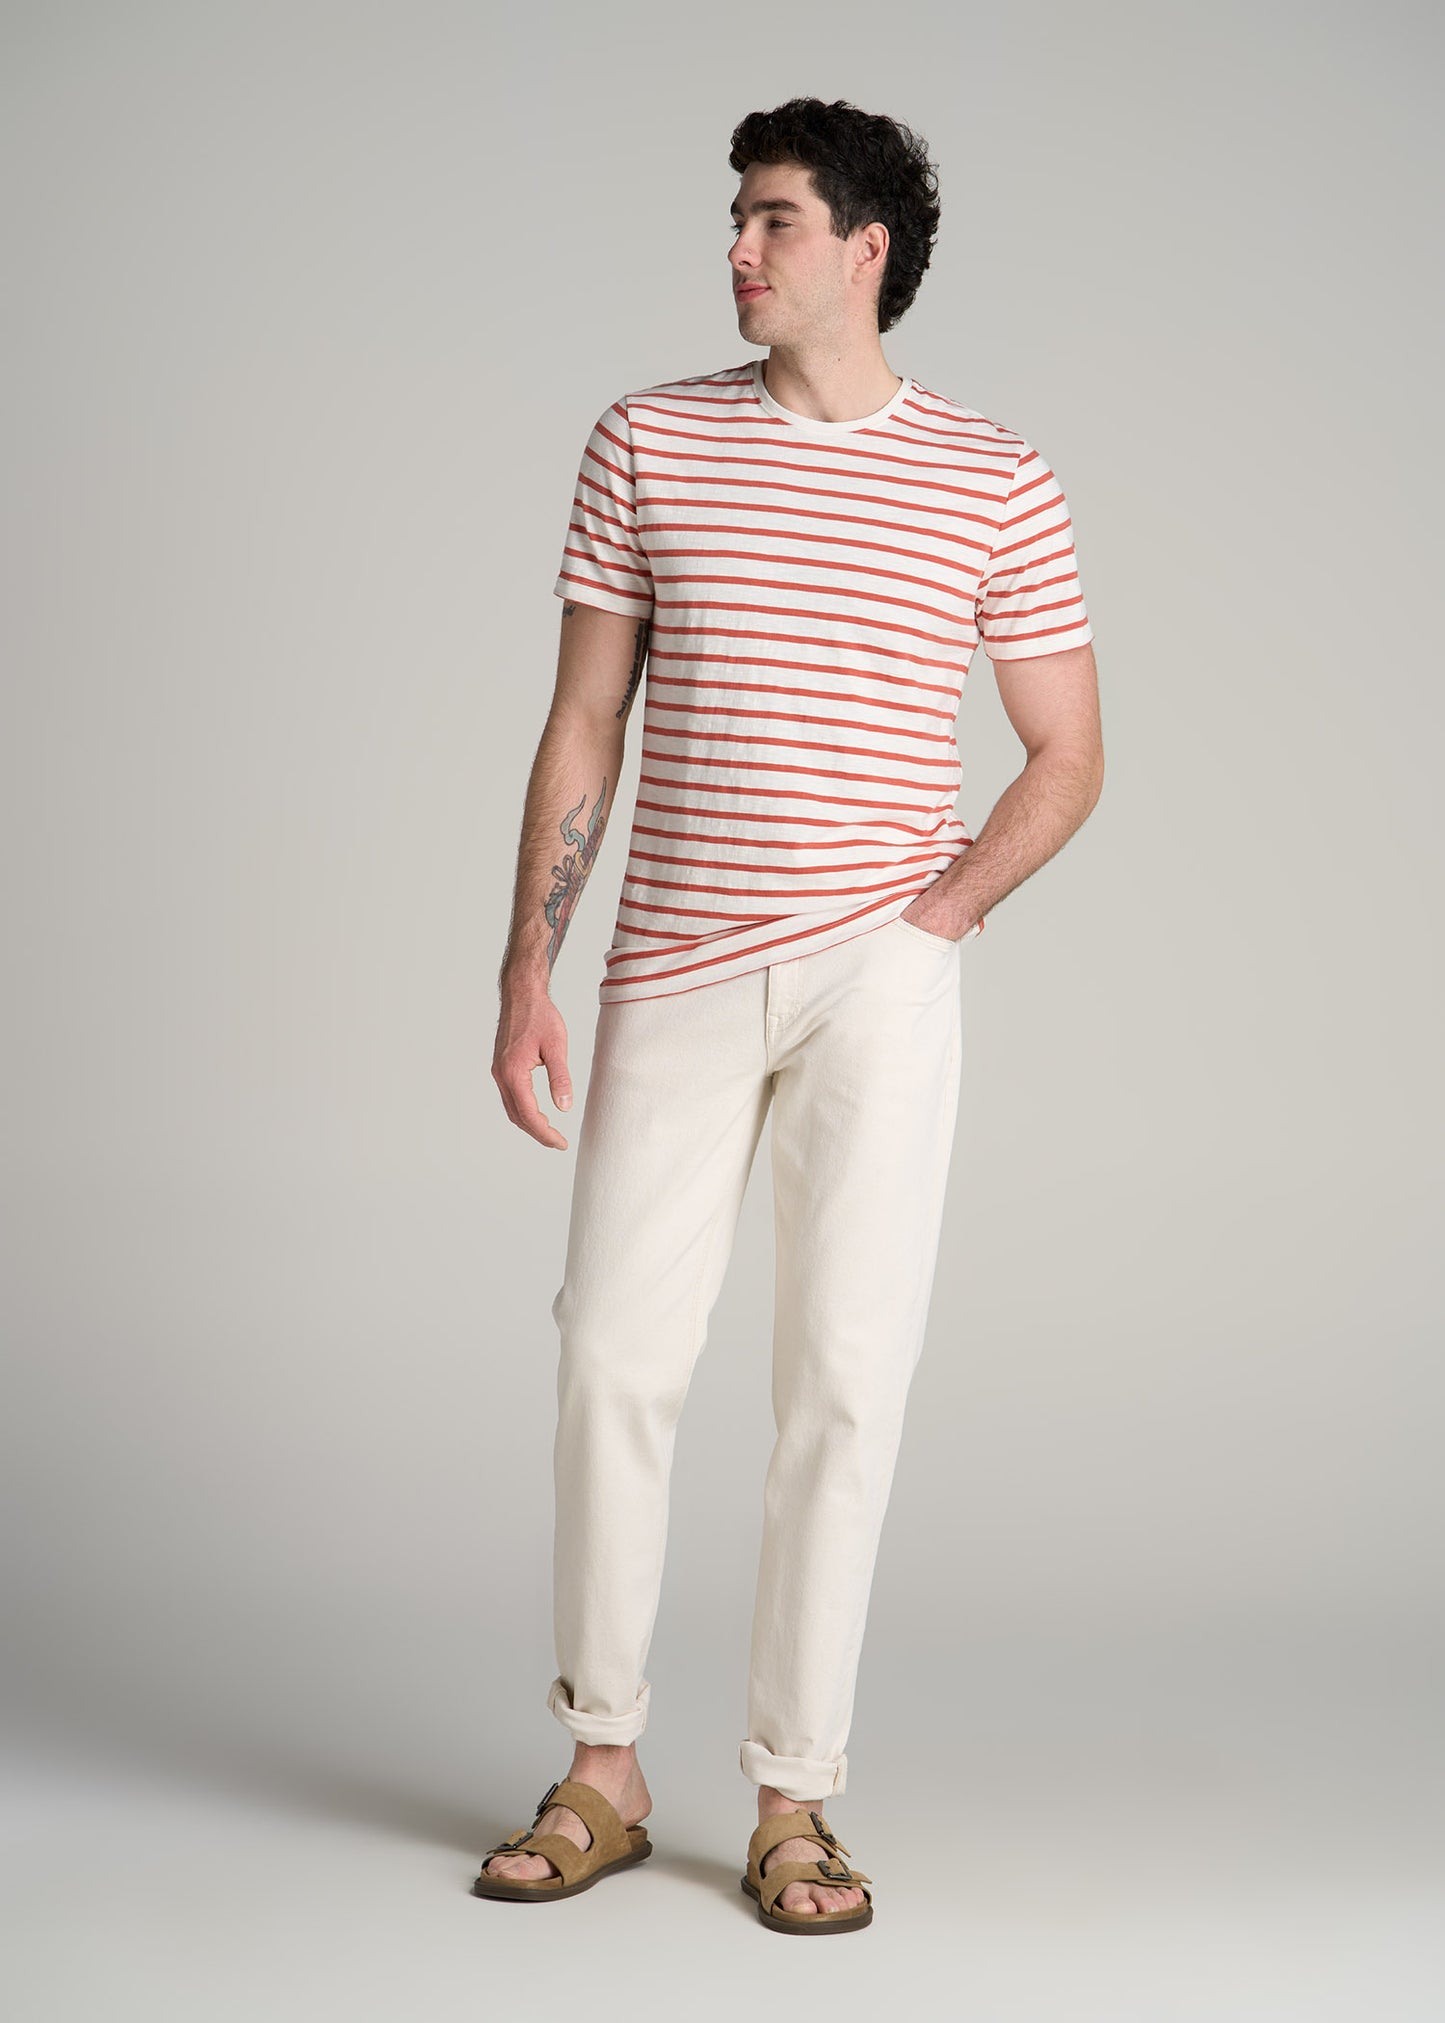 REGULAR-FIT Striped Tee in Burnt Orange and White Stripe - Men's Tall T-shirt